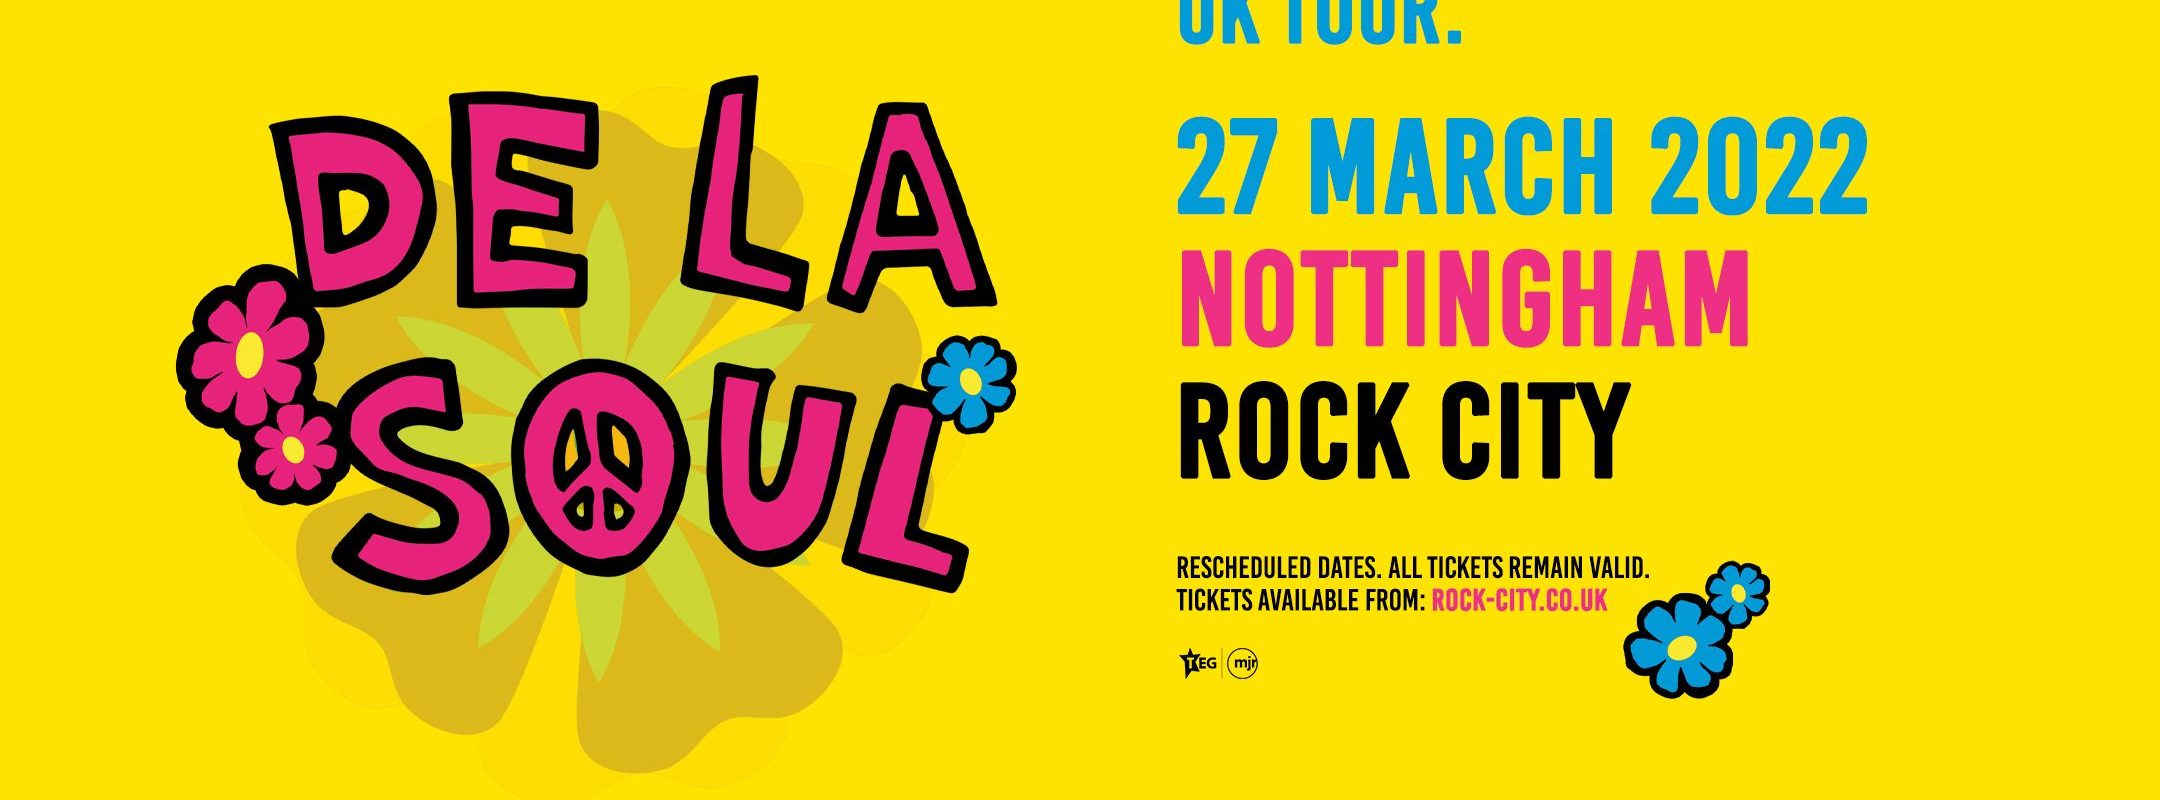 DE LA SOUL: Celebrating 30 Years Of De La Soul - Rock City